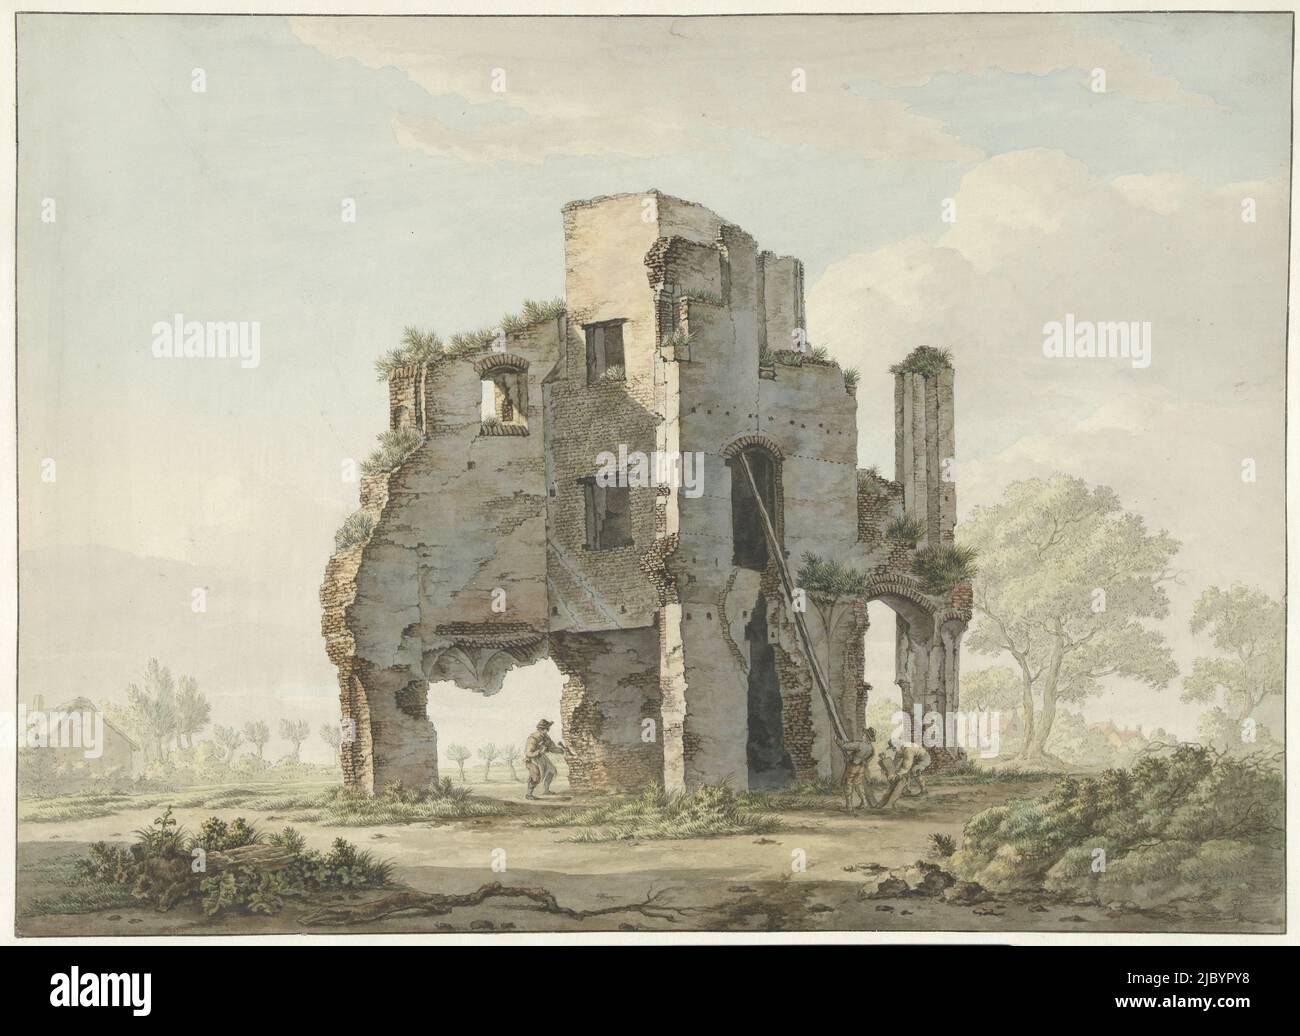 The demolition of the ruins of the Abbey of Rijnsburg, Johannes van Lexmond, 1779 - 1838, draughtsman: Johannes van Lexmond, 1779 - 1838, paper, brush, h 400 mm × w 551 mm Stock Photo